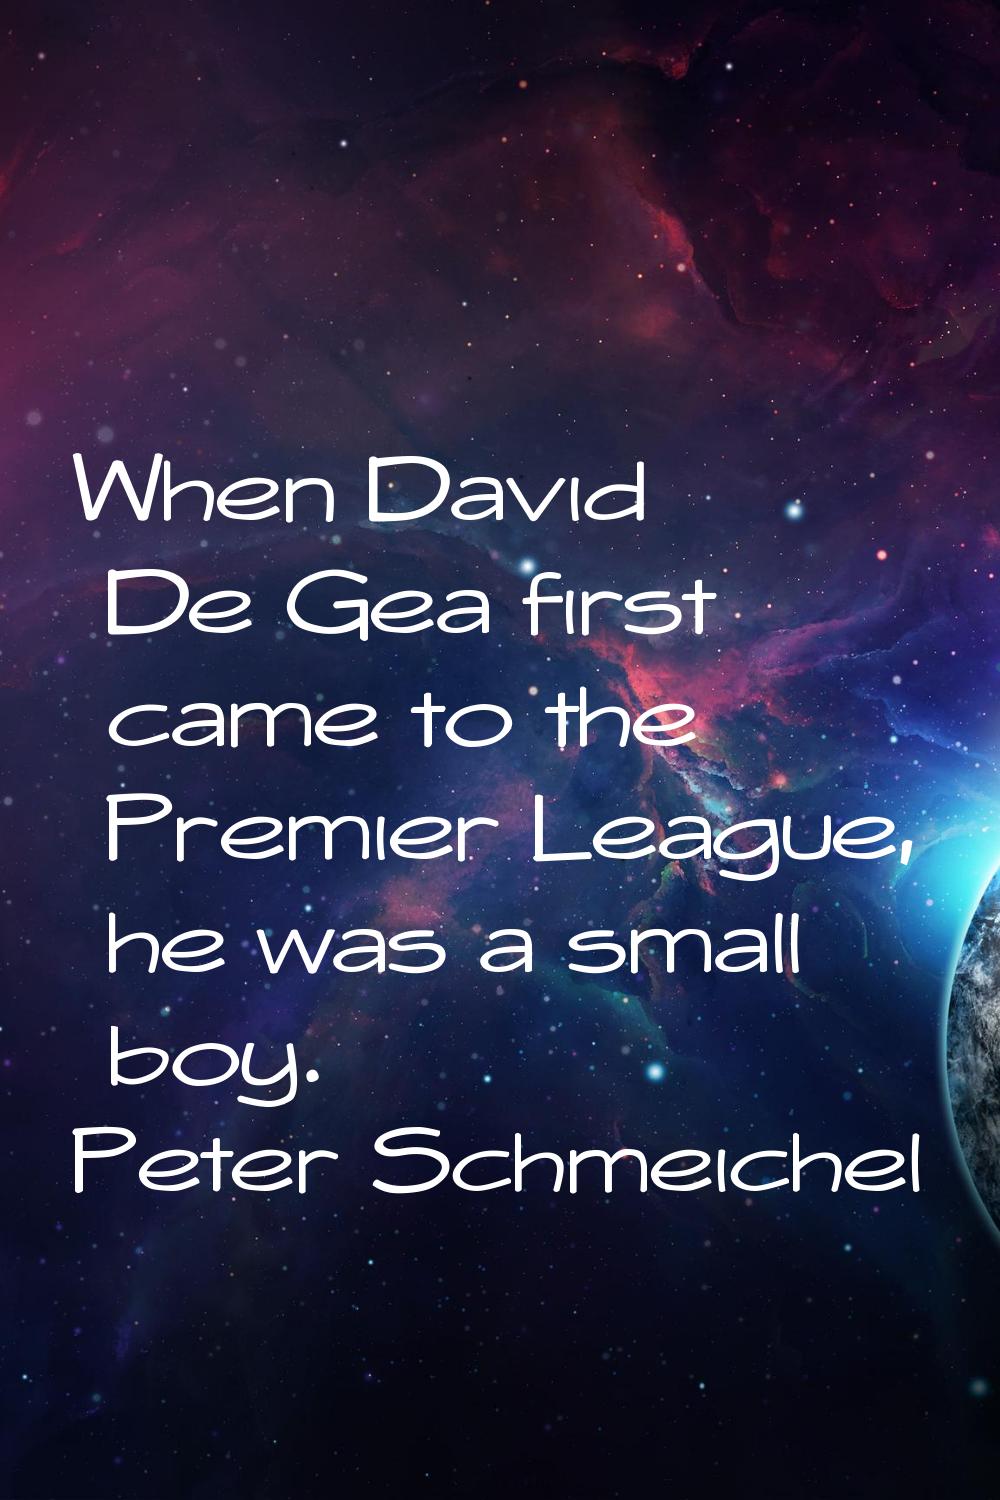 When David De Gea first came to the Premier League, he was a small boy.